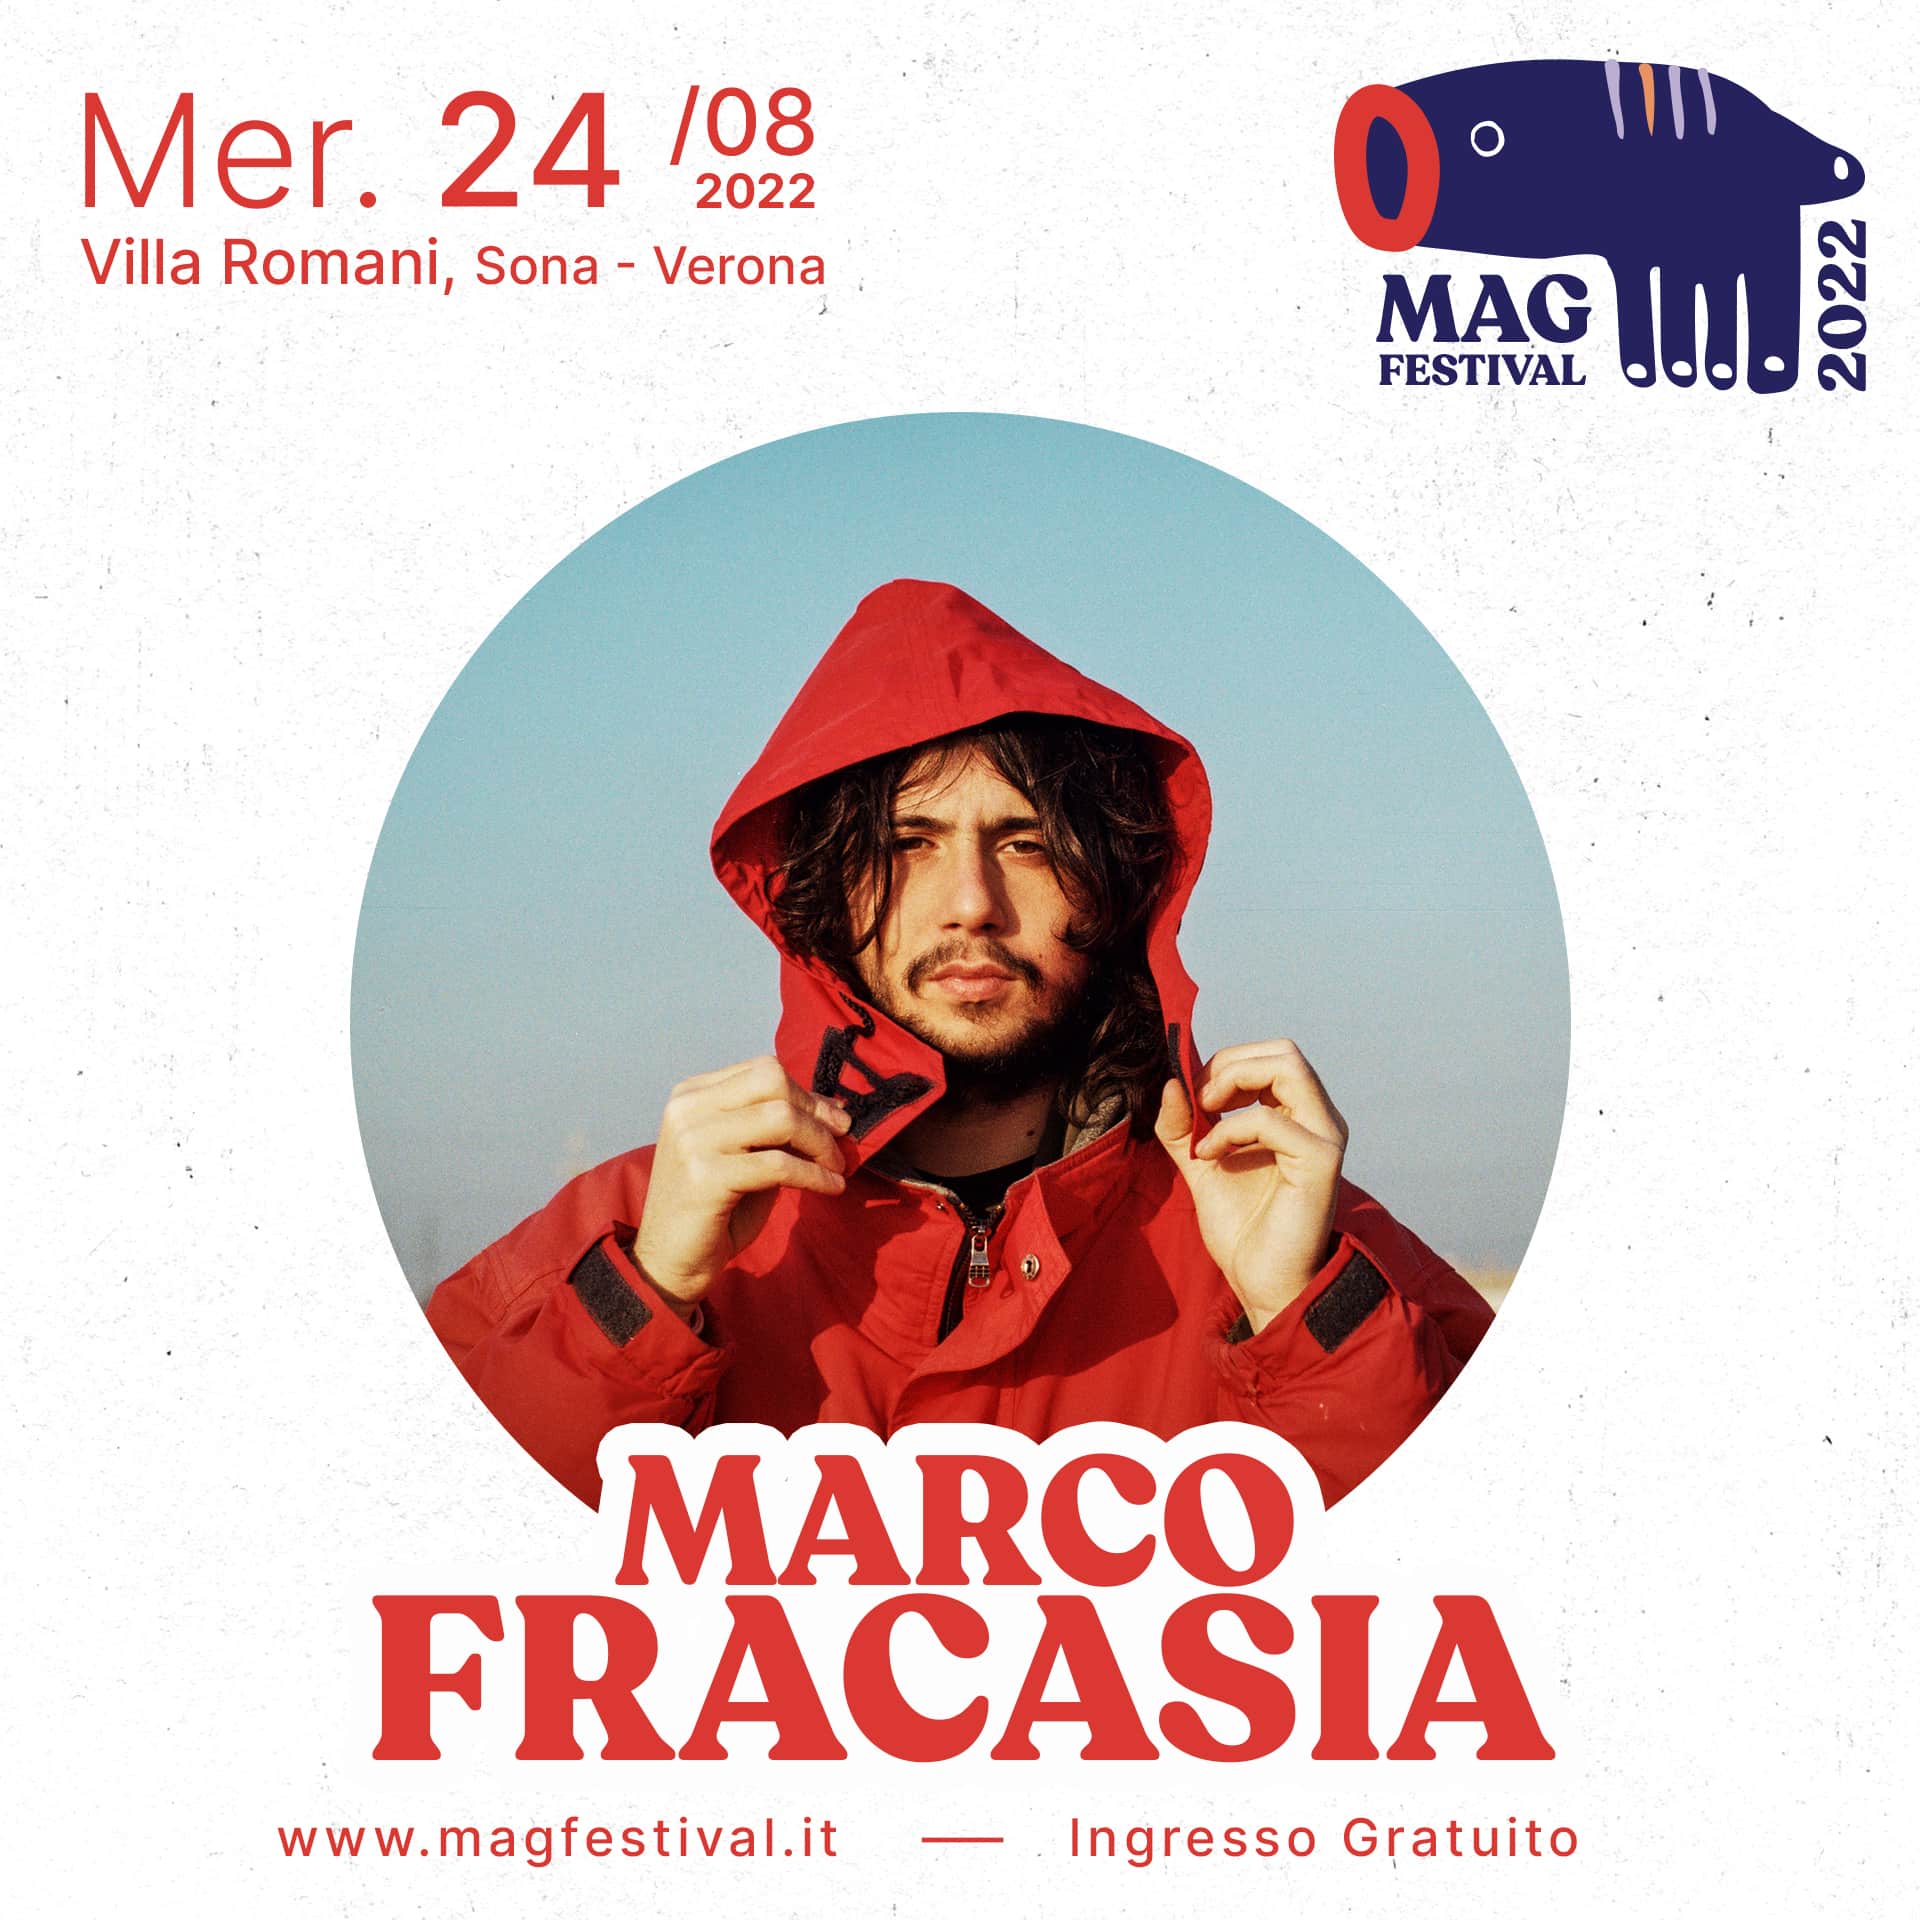 MARCO FRACASIA - FEED